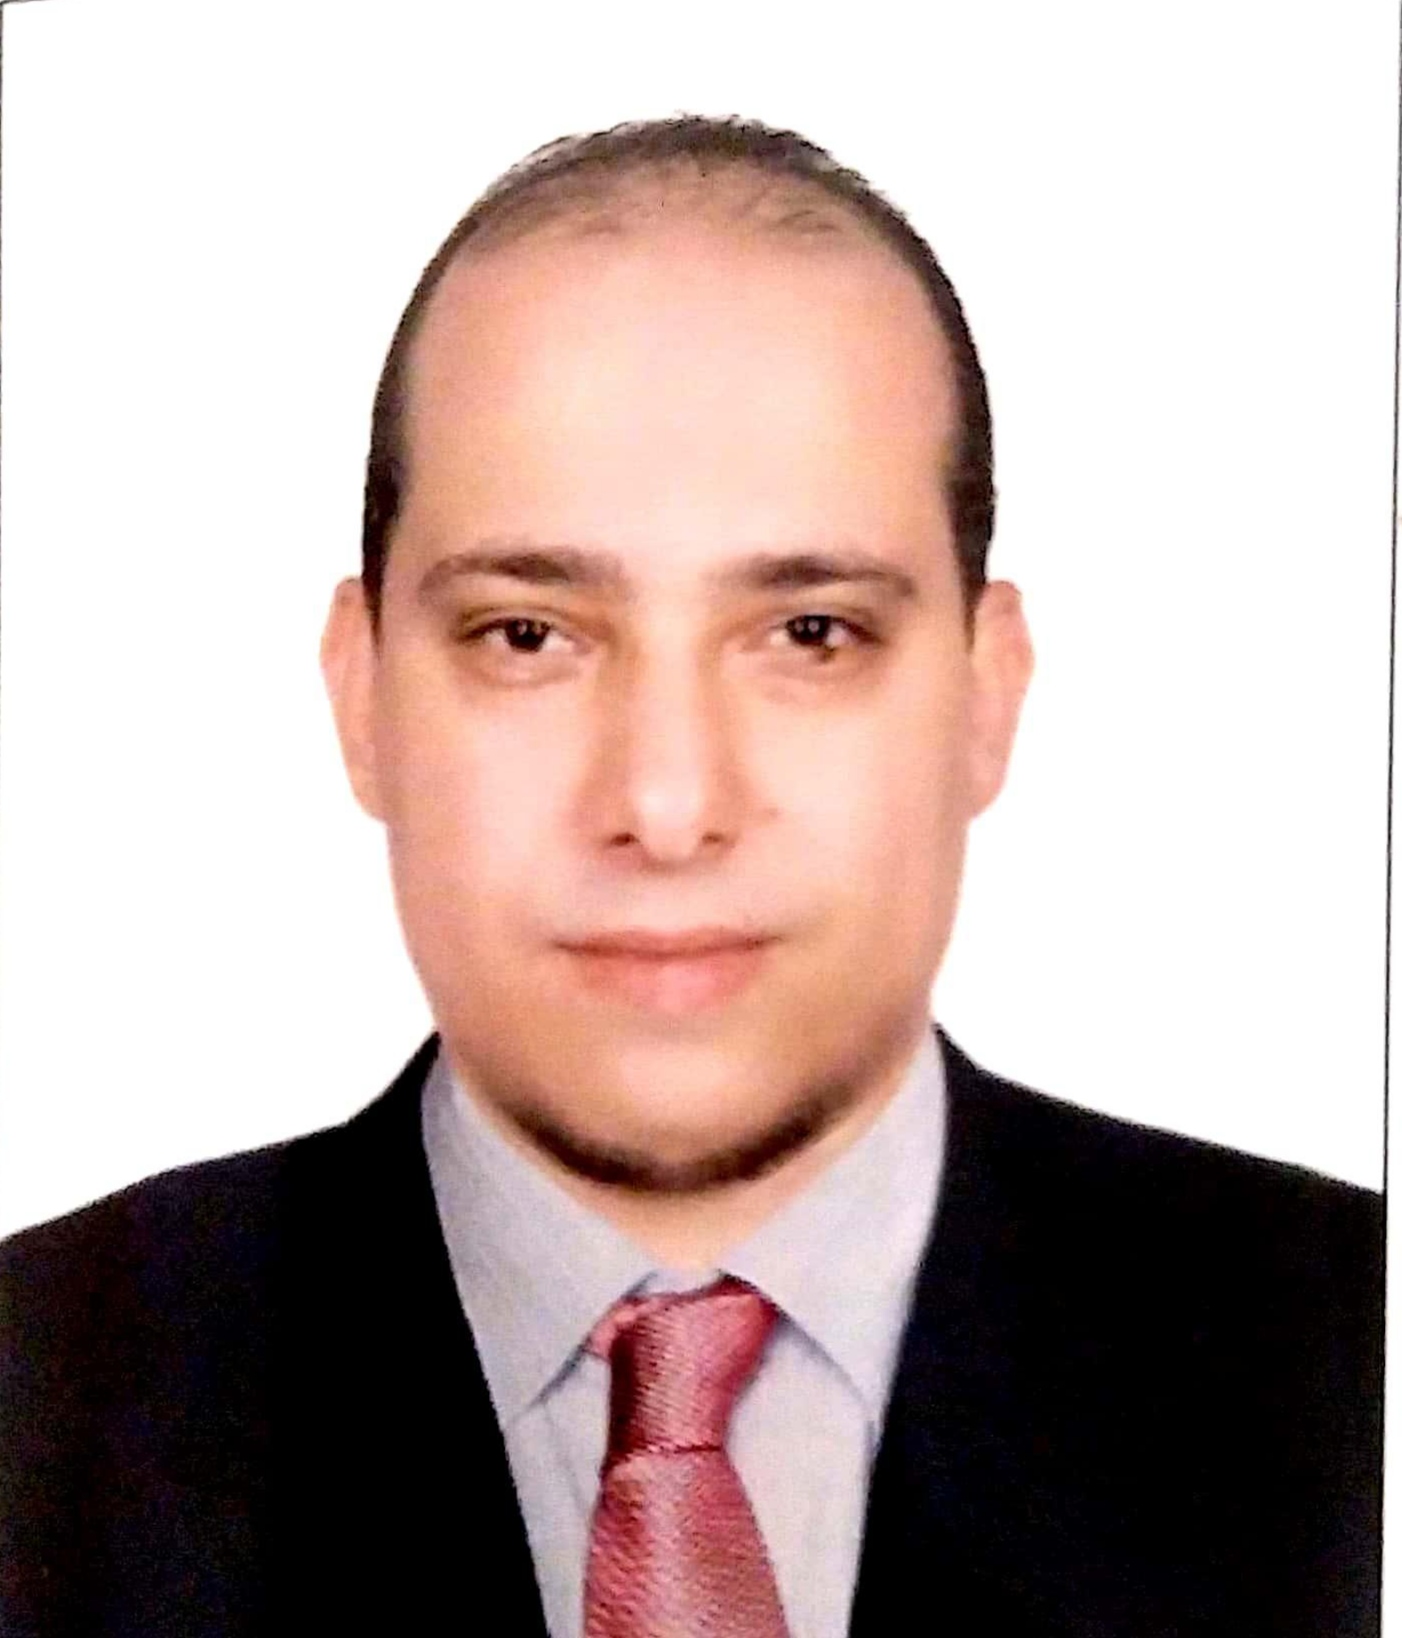 Mr. Adel Saeed Saad Zaghloul El Sayed